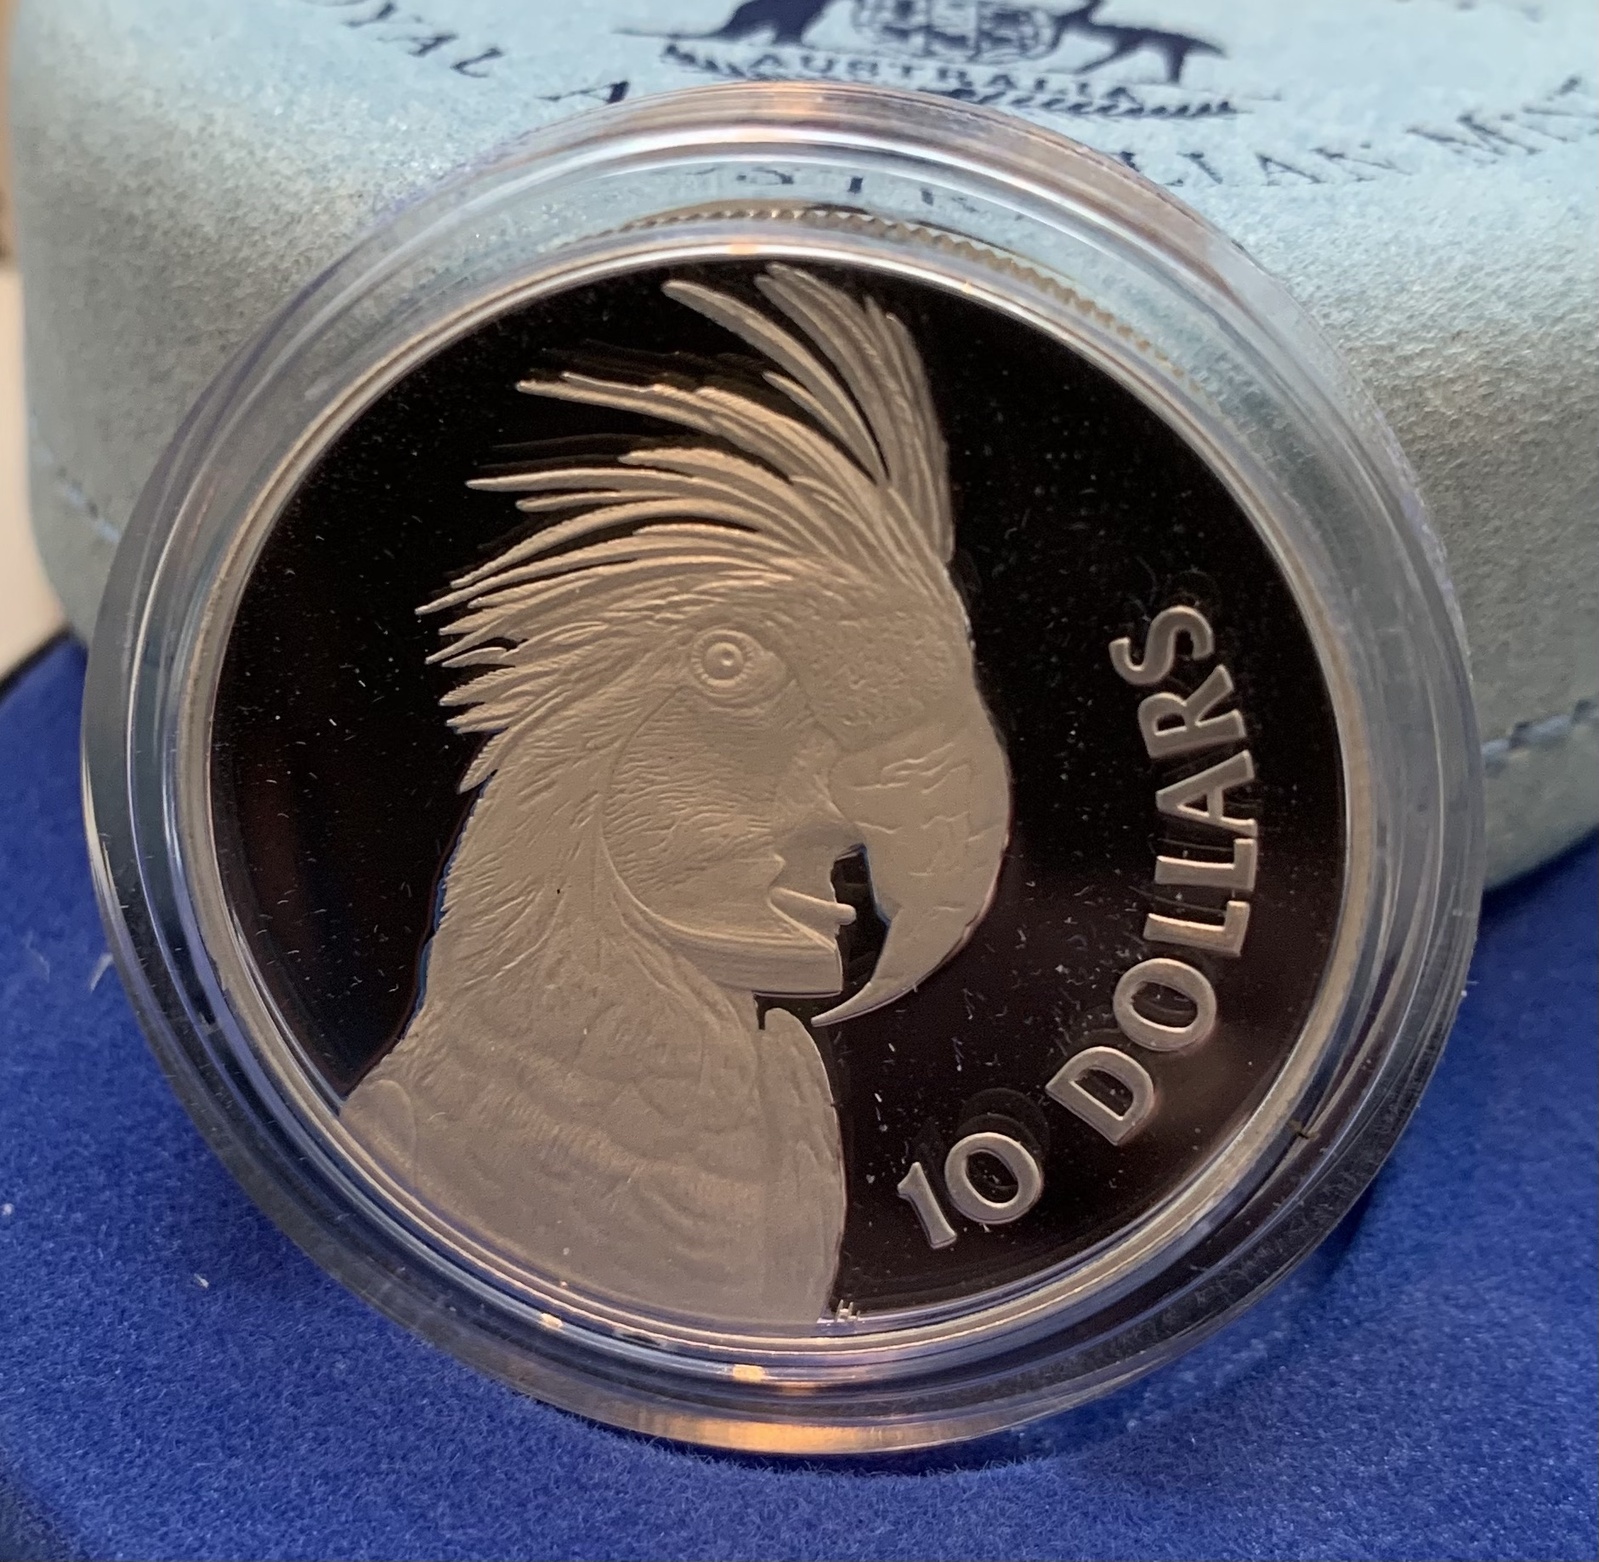 1993 Birds of Australia $10 Piedfort - Palm Cockatoo